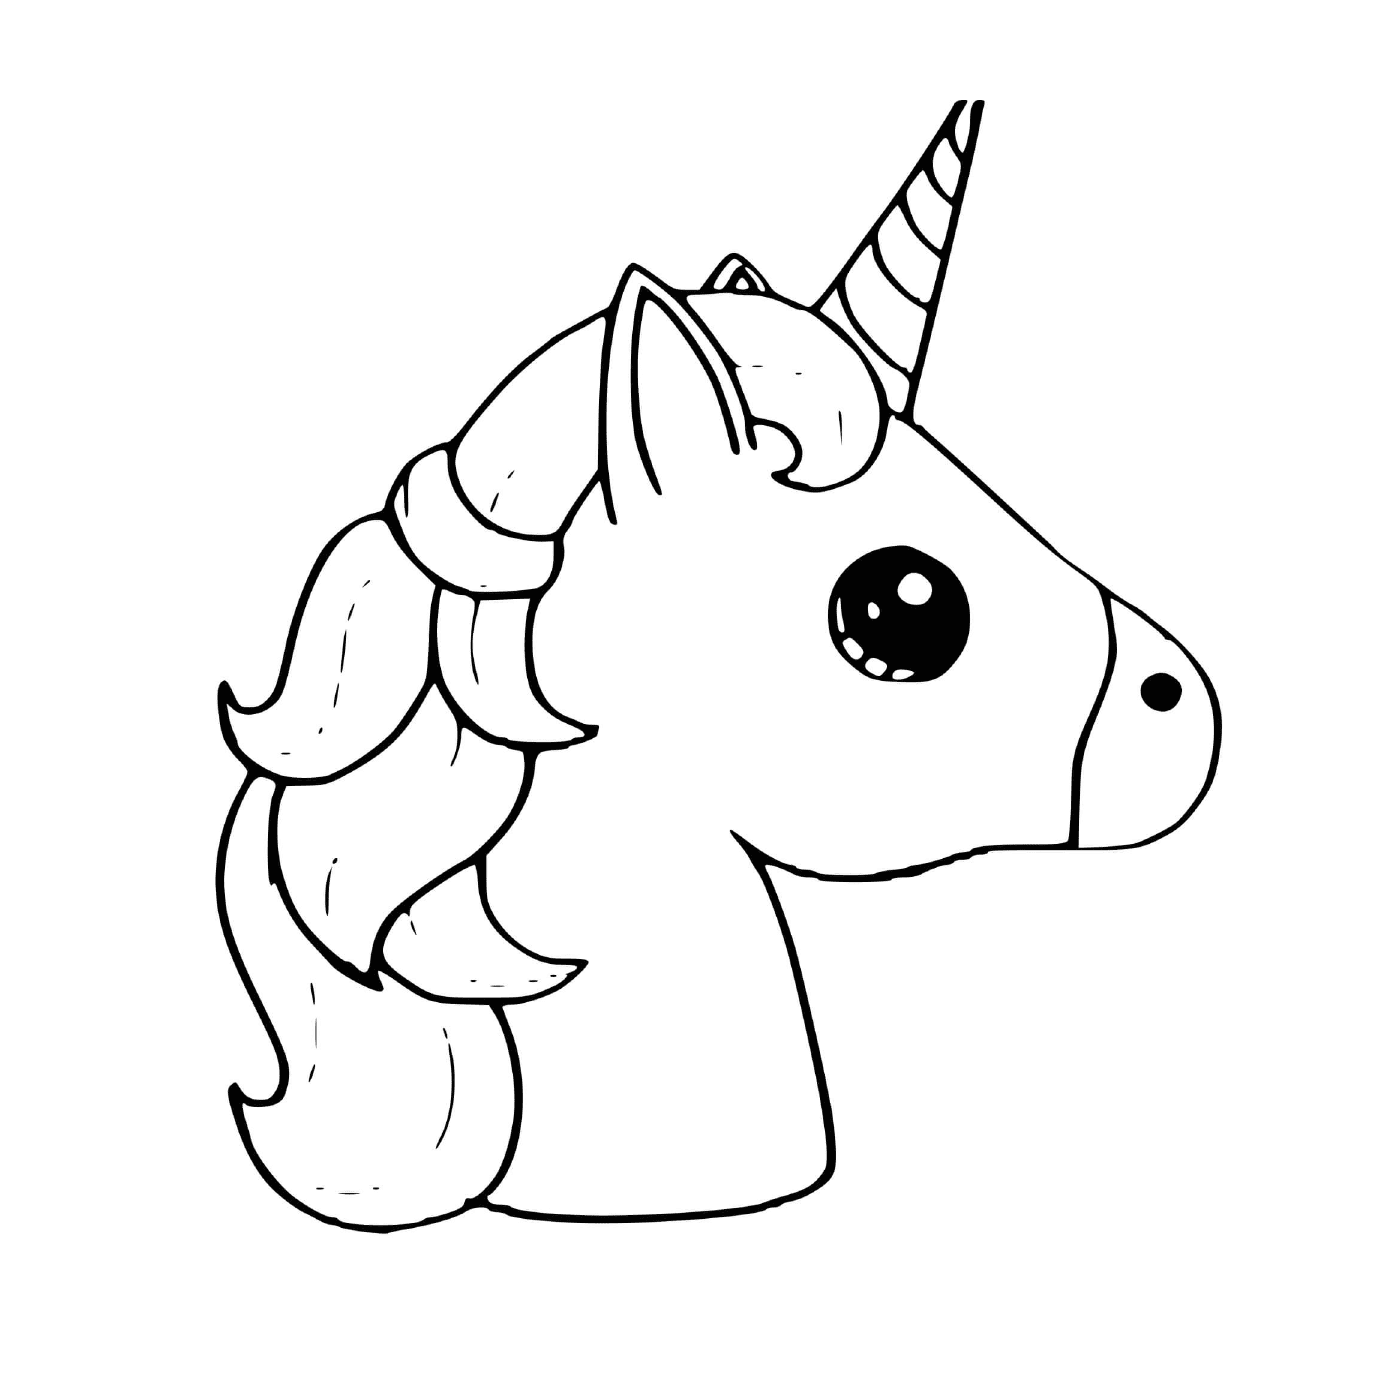  Carino l'unicorno kawaii 